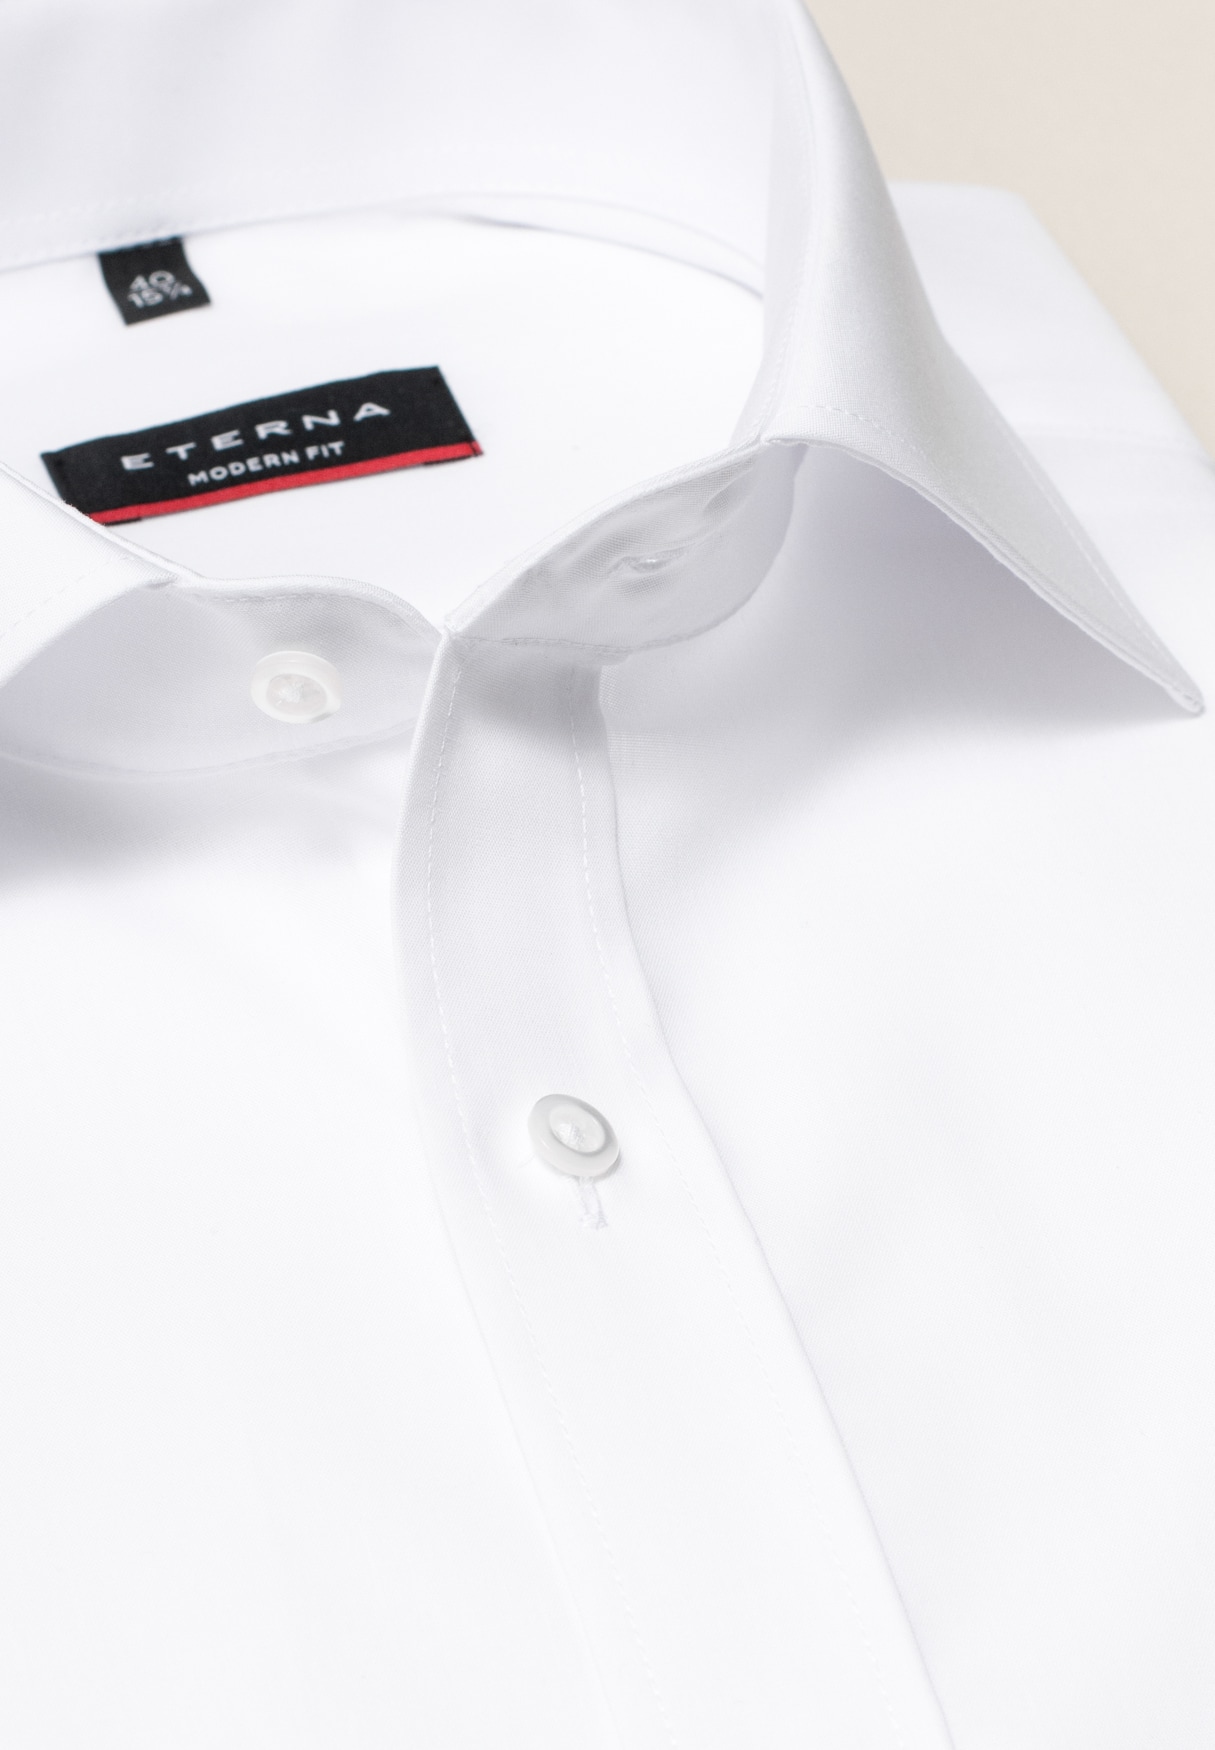 MODERN FIT Original Shirt in 1SH00113-00-01-41-1/1 weiß Langarm 41 unifarben | | | weiß 